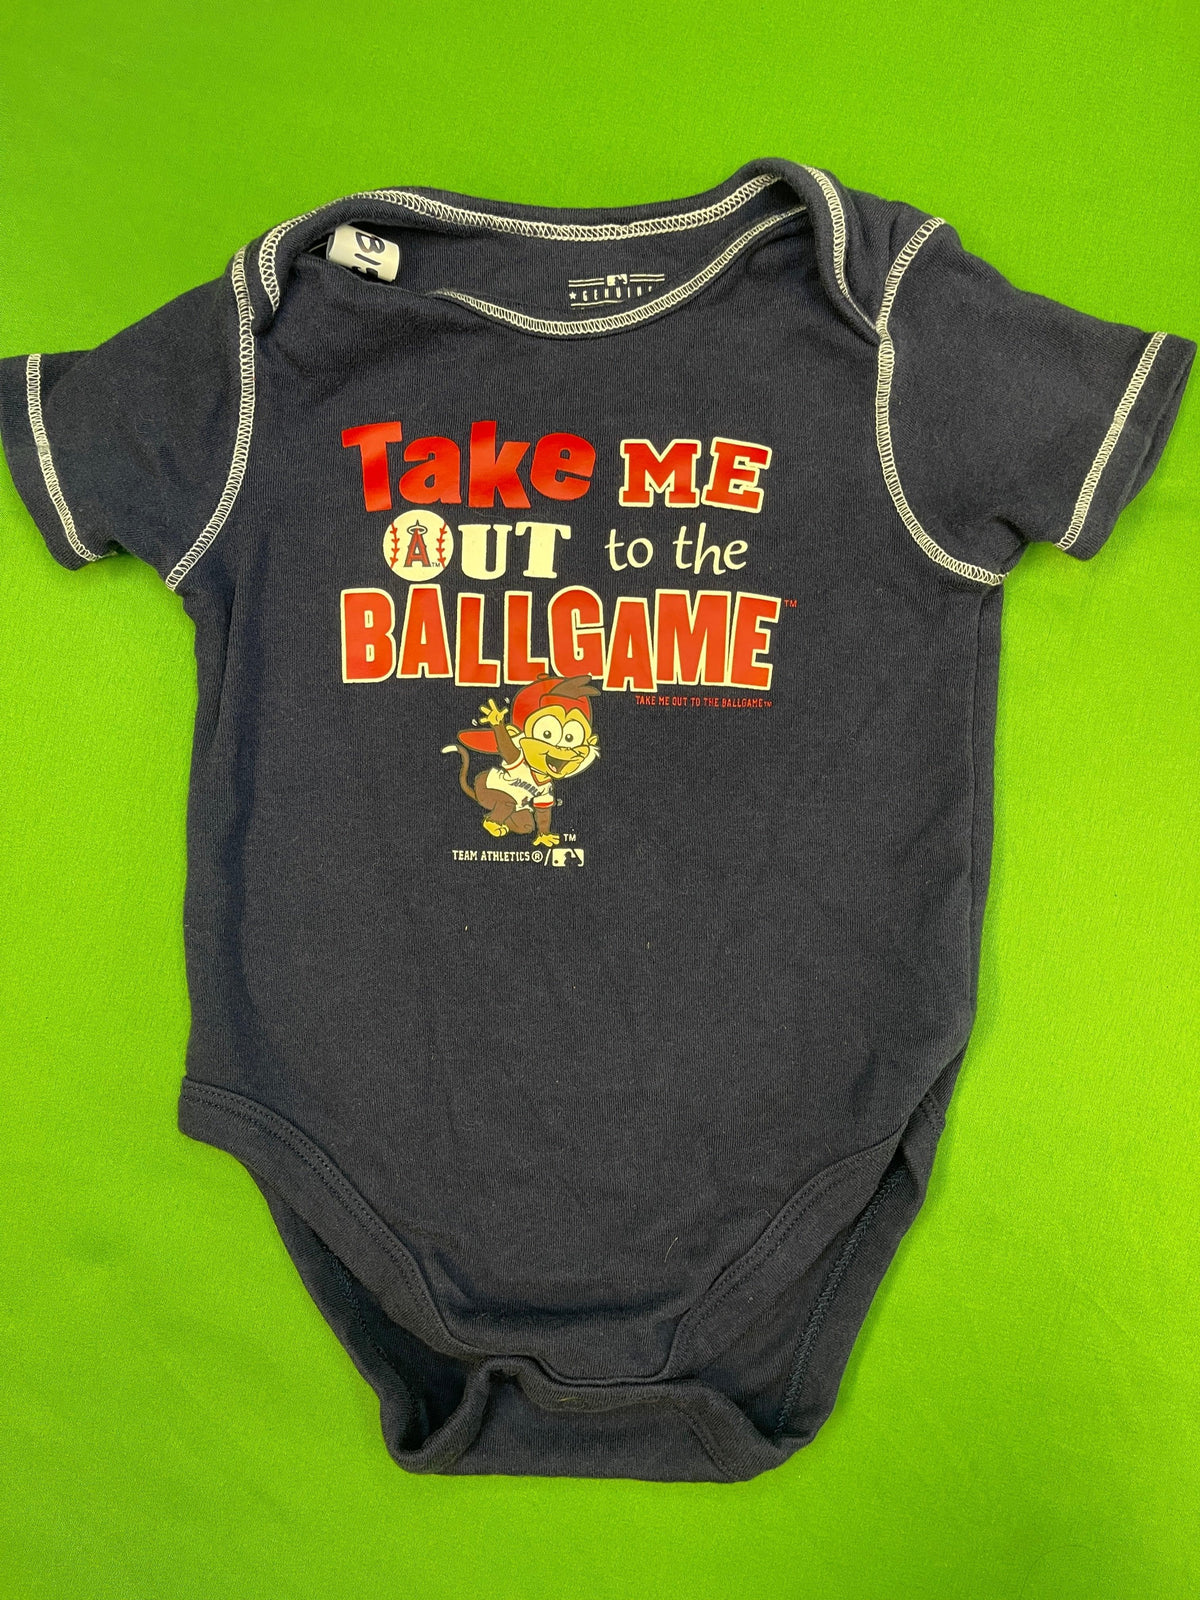 MLB Los Angeles Angels Team Athletics Infant Bodysuit/Vest 18 months